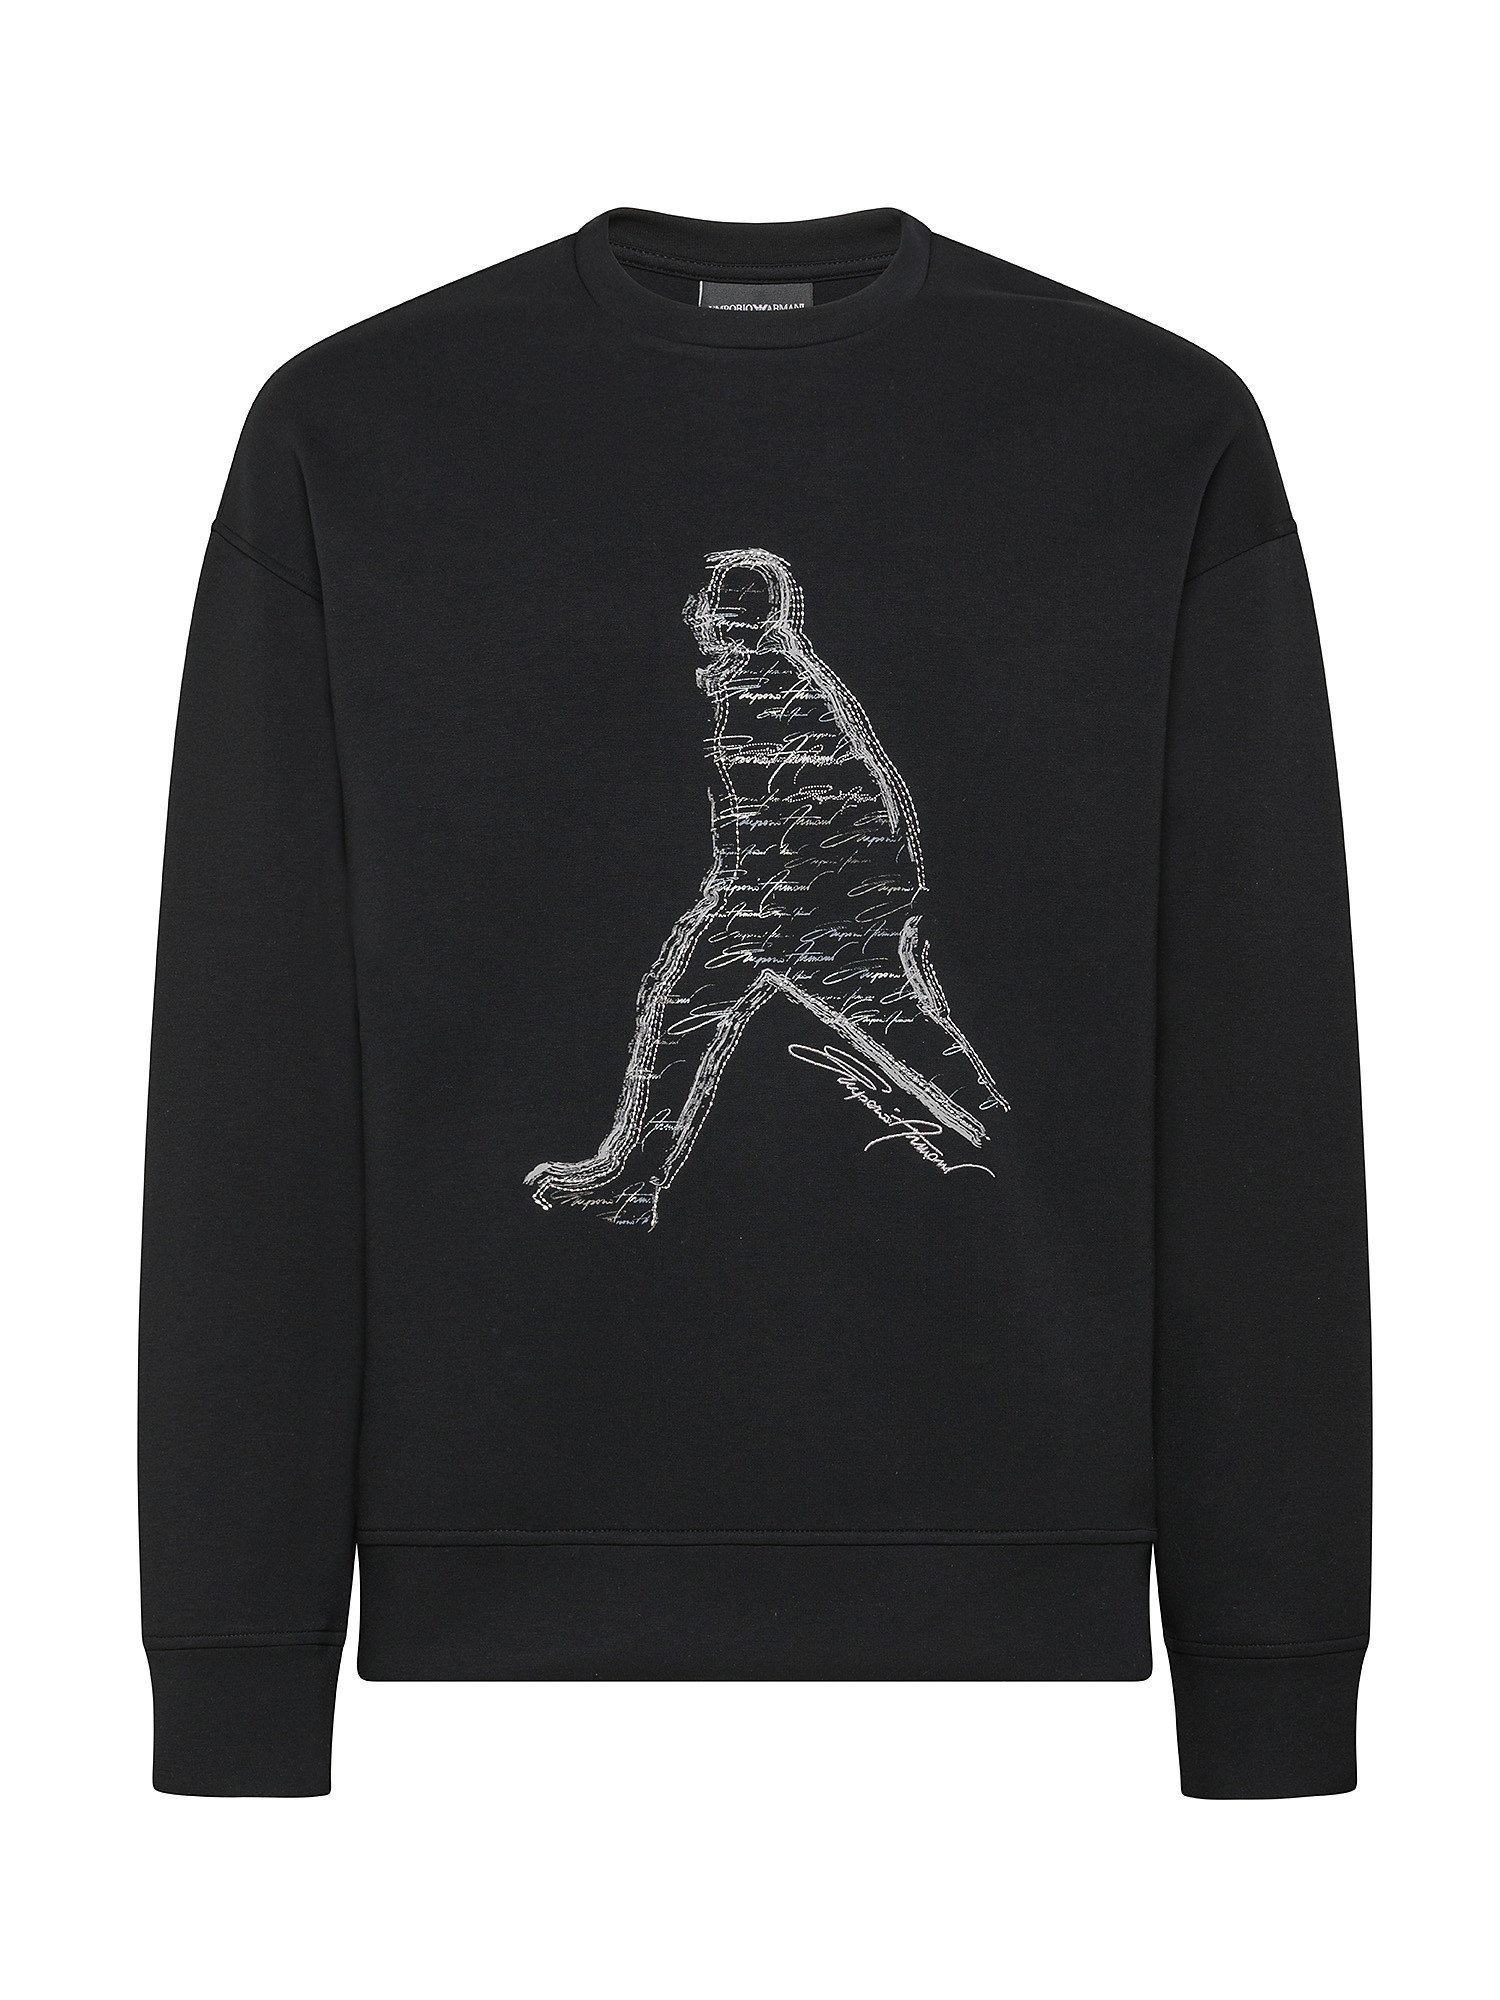 Emporio Armani - Sweatshirt with print, Black, large image number 0